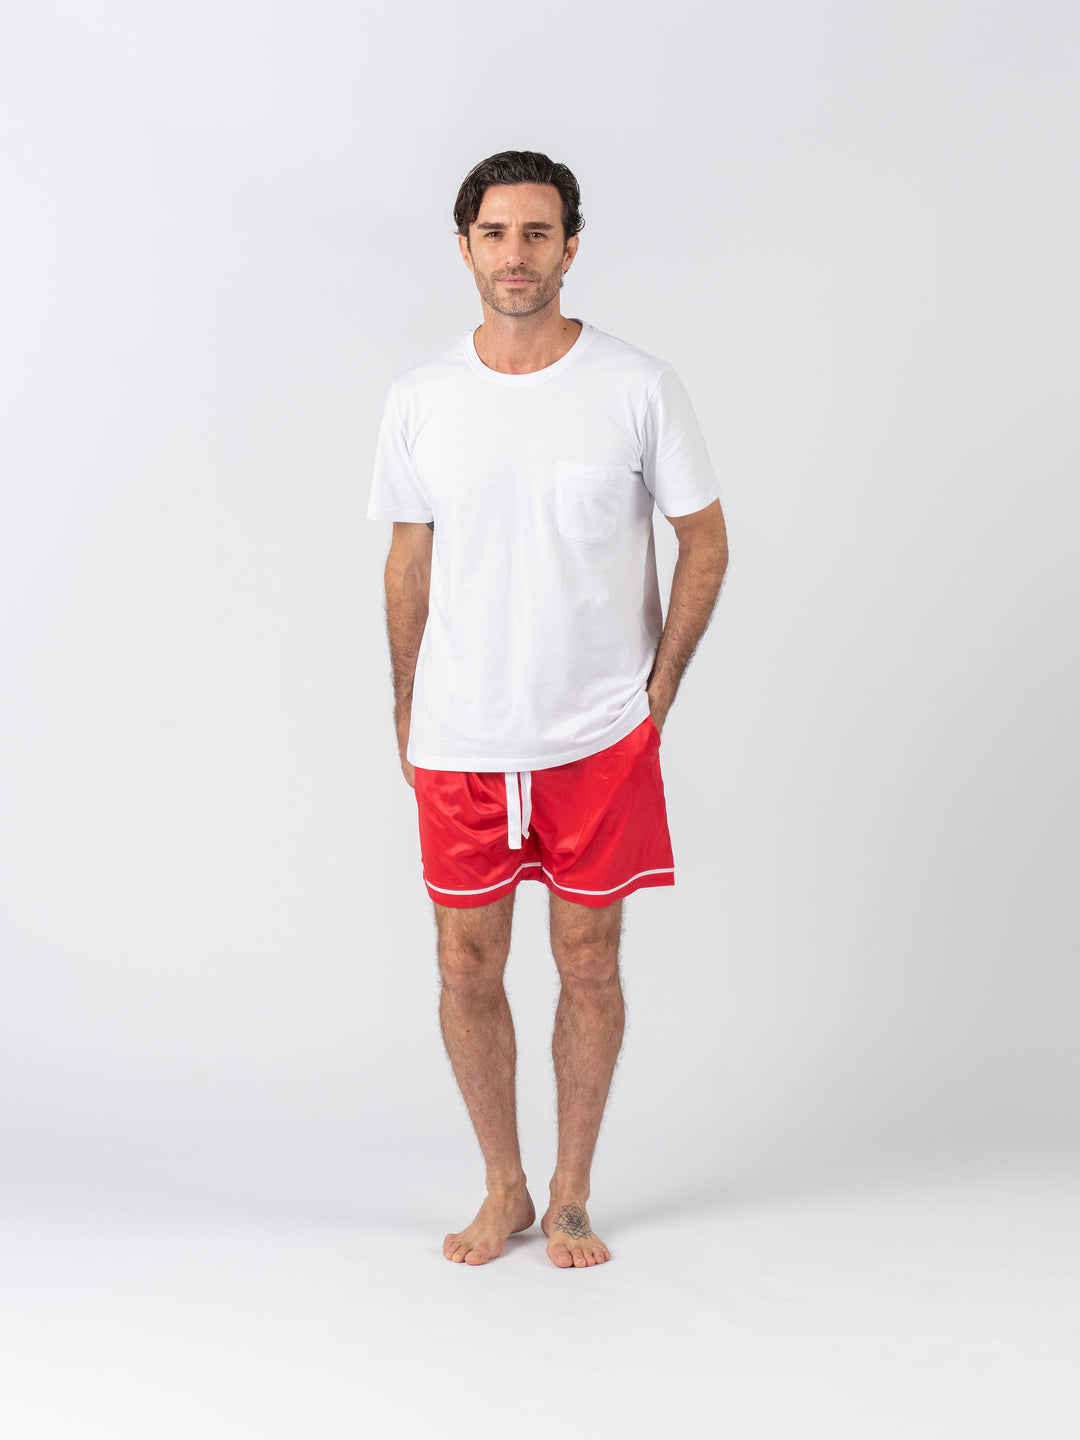 Men's Satin Personalised Pyjama Set - Cotton Shirt with Red Shorts